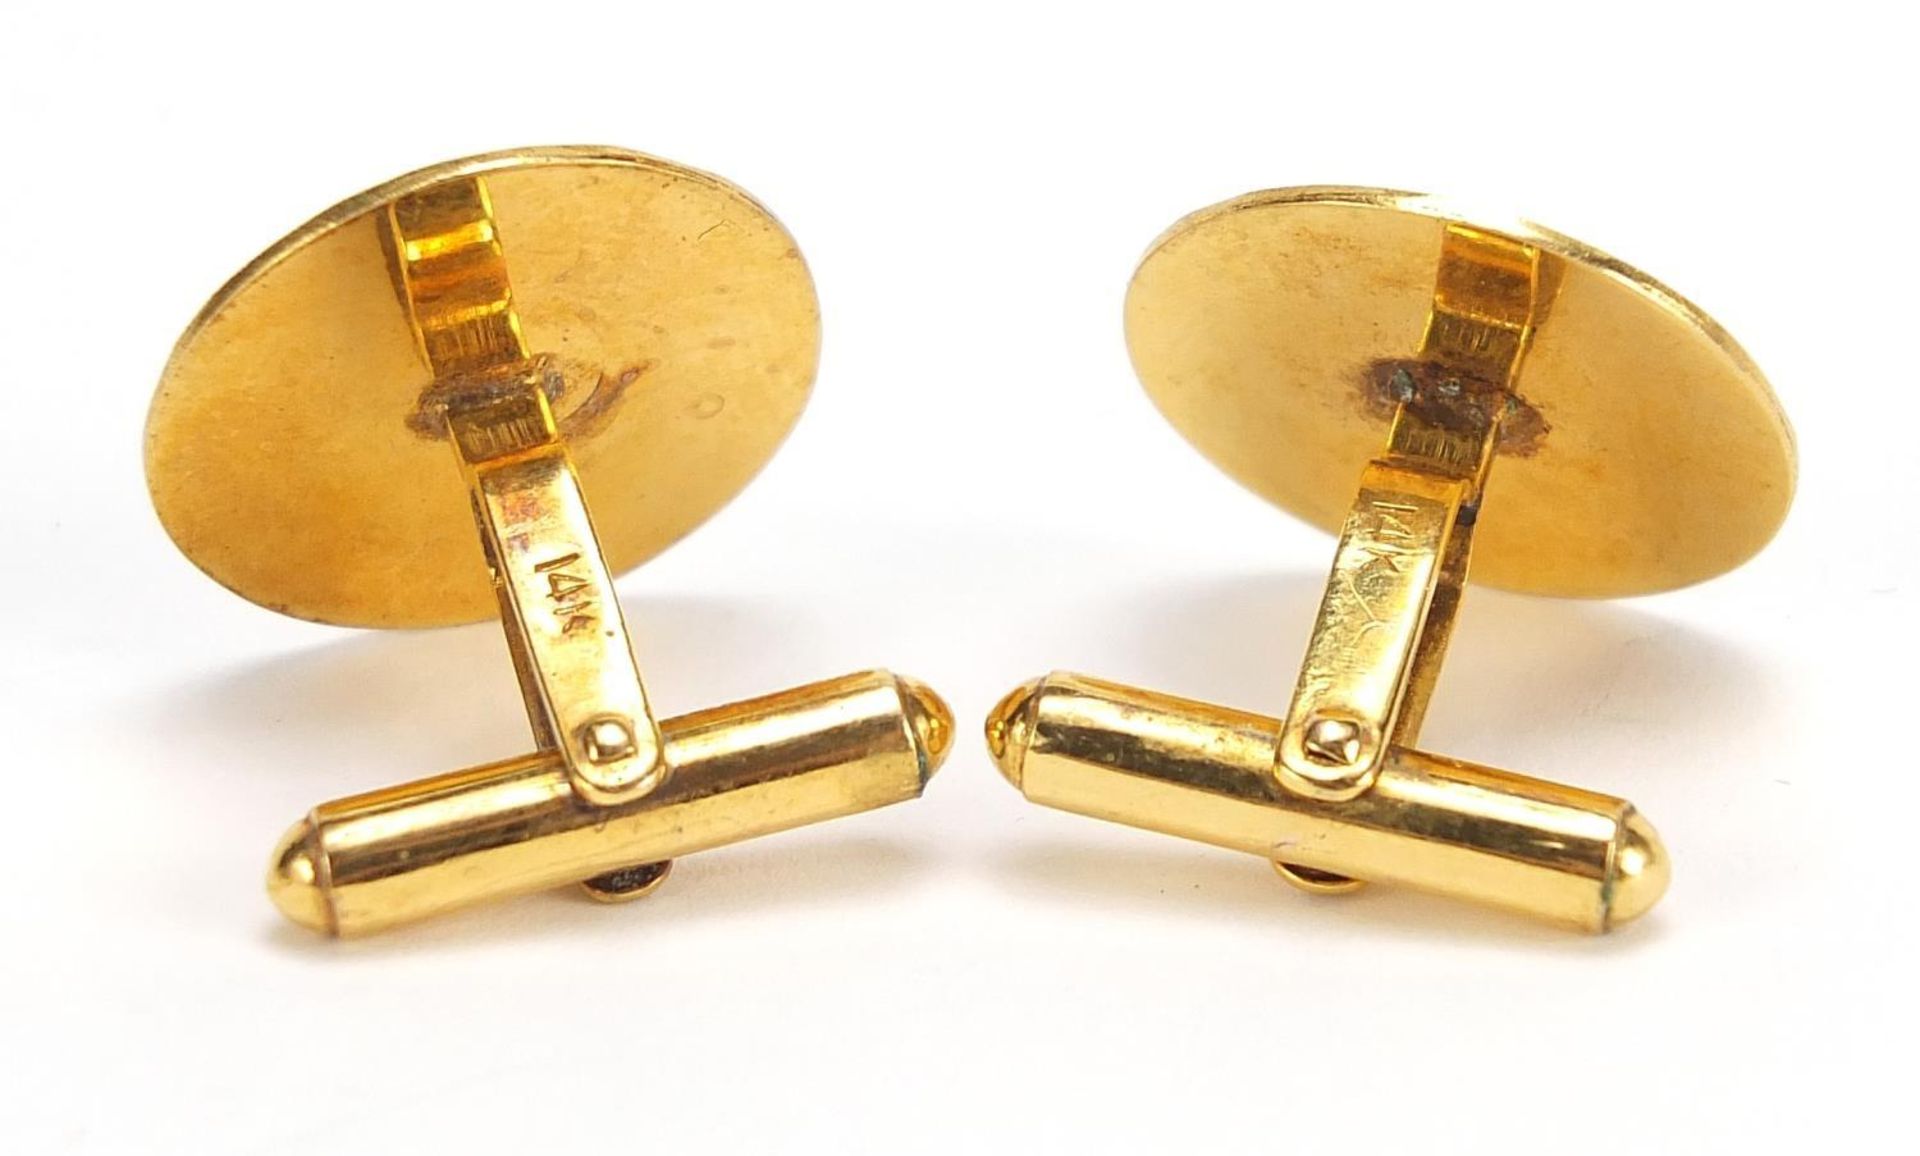 Pair of Chinese 14ct gold cufflinks, 2cm in diameter, 7.0g : - Image 2 of 3